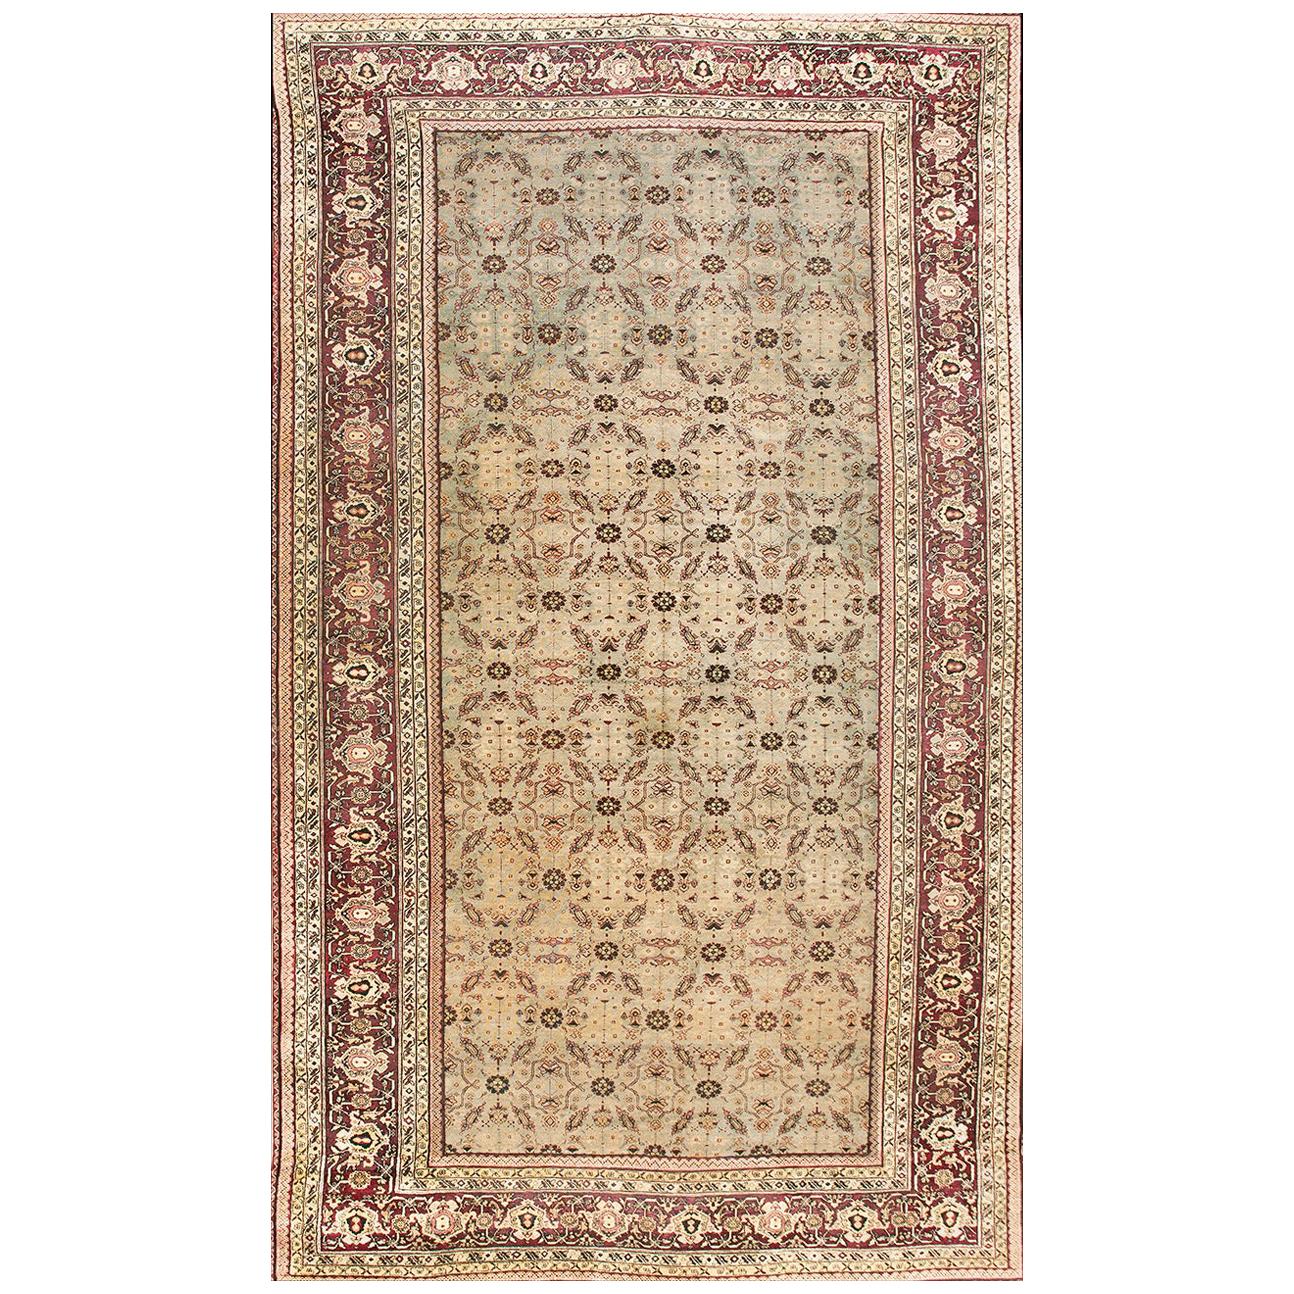 Late 19th Century Indian Agra Carpet ( 10'4" x 18'3" - 315 x 556 )